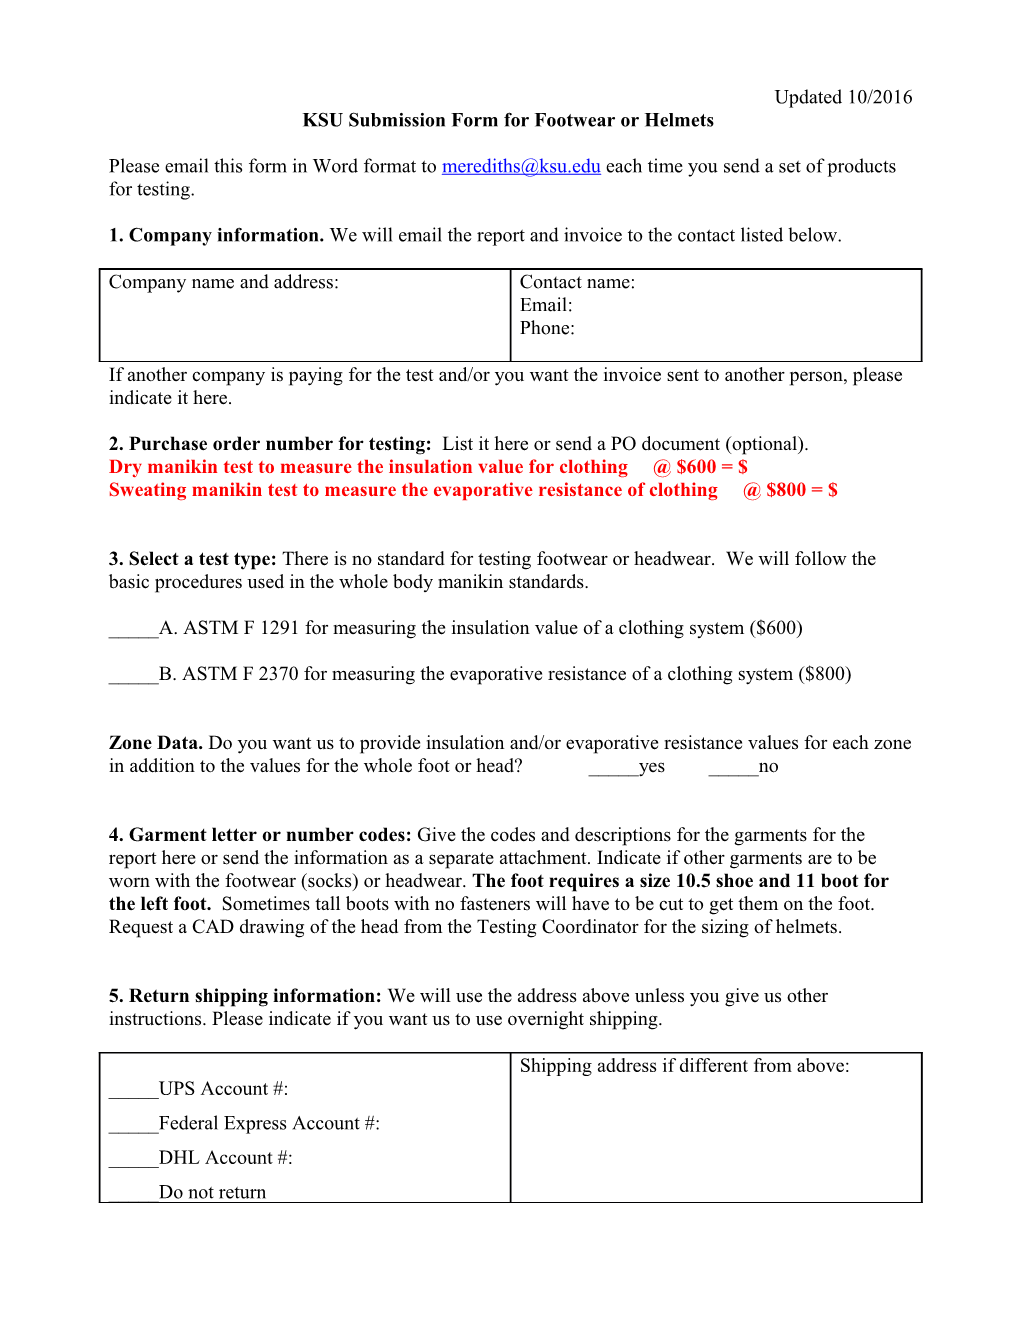 KSU Submission Form for Footwear Or Helmets